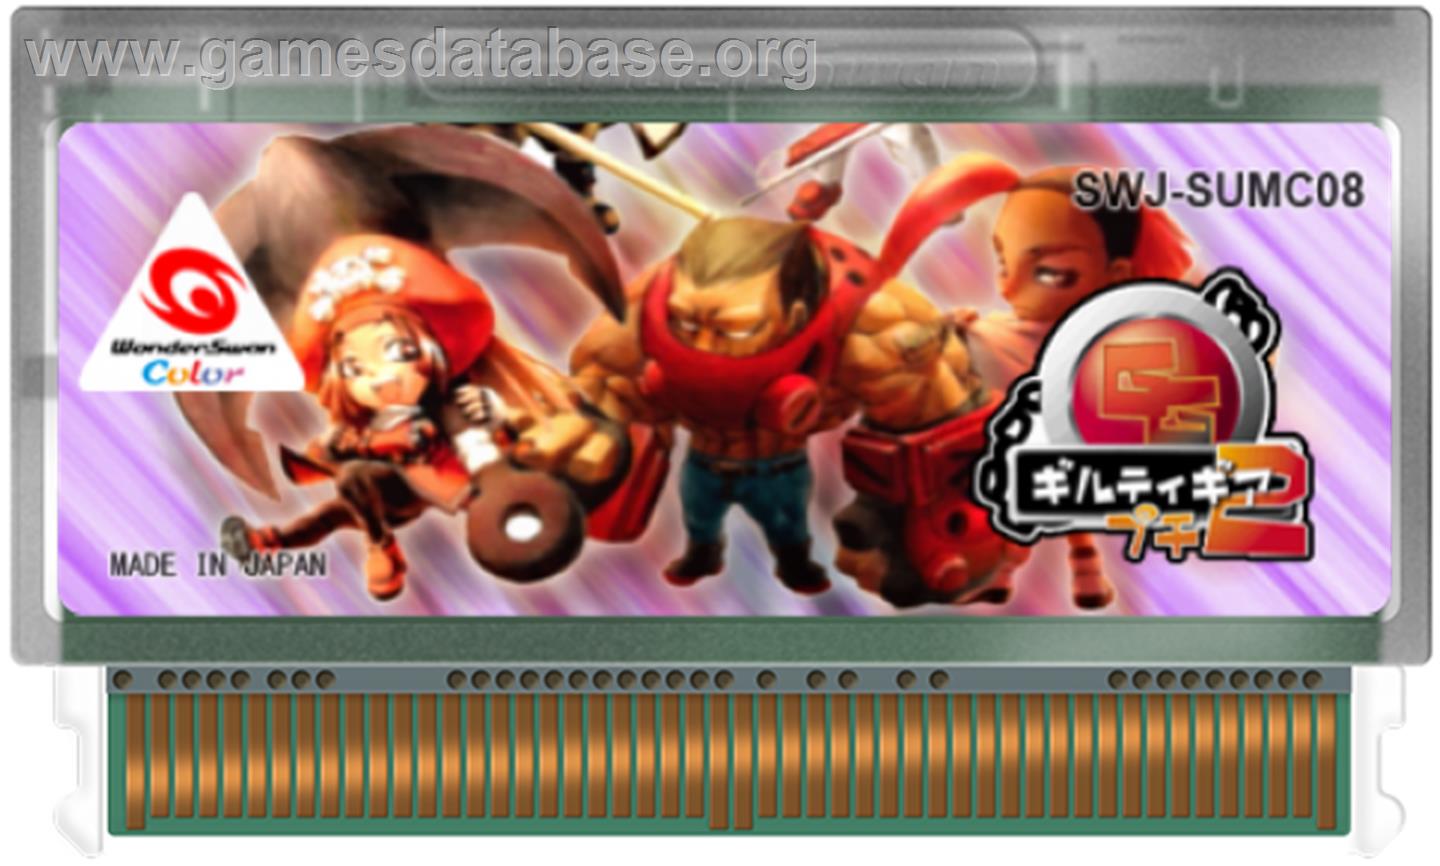 Guilty Gear Petit 2 - Bandai WonderSwan Color - Artwork - Cartridge